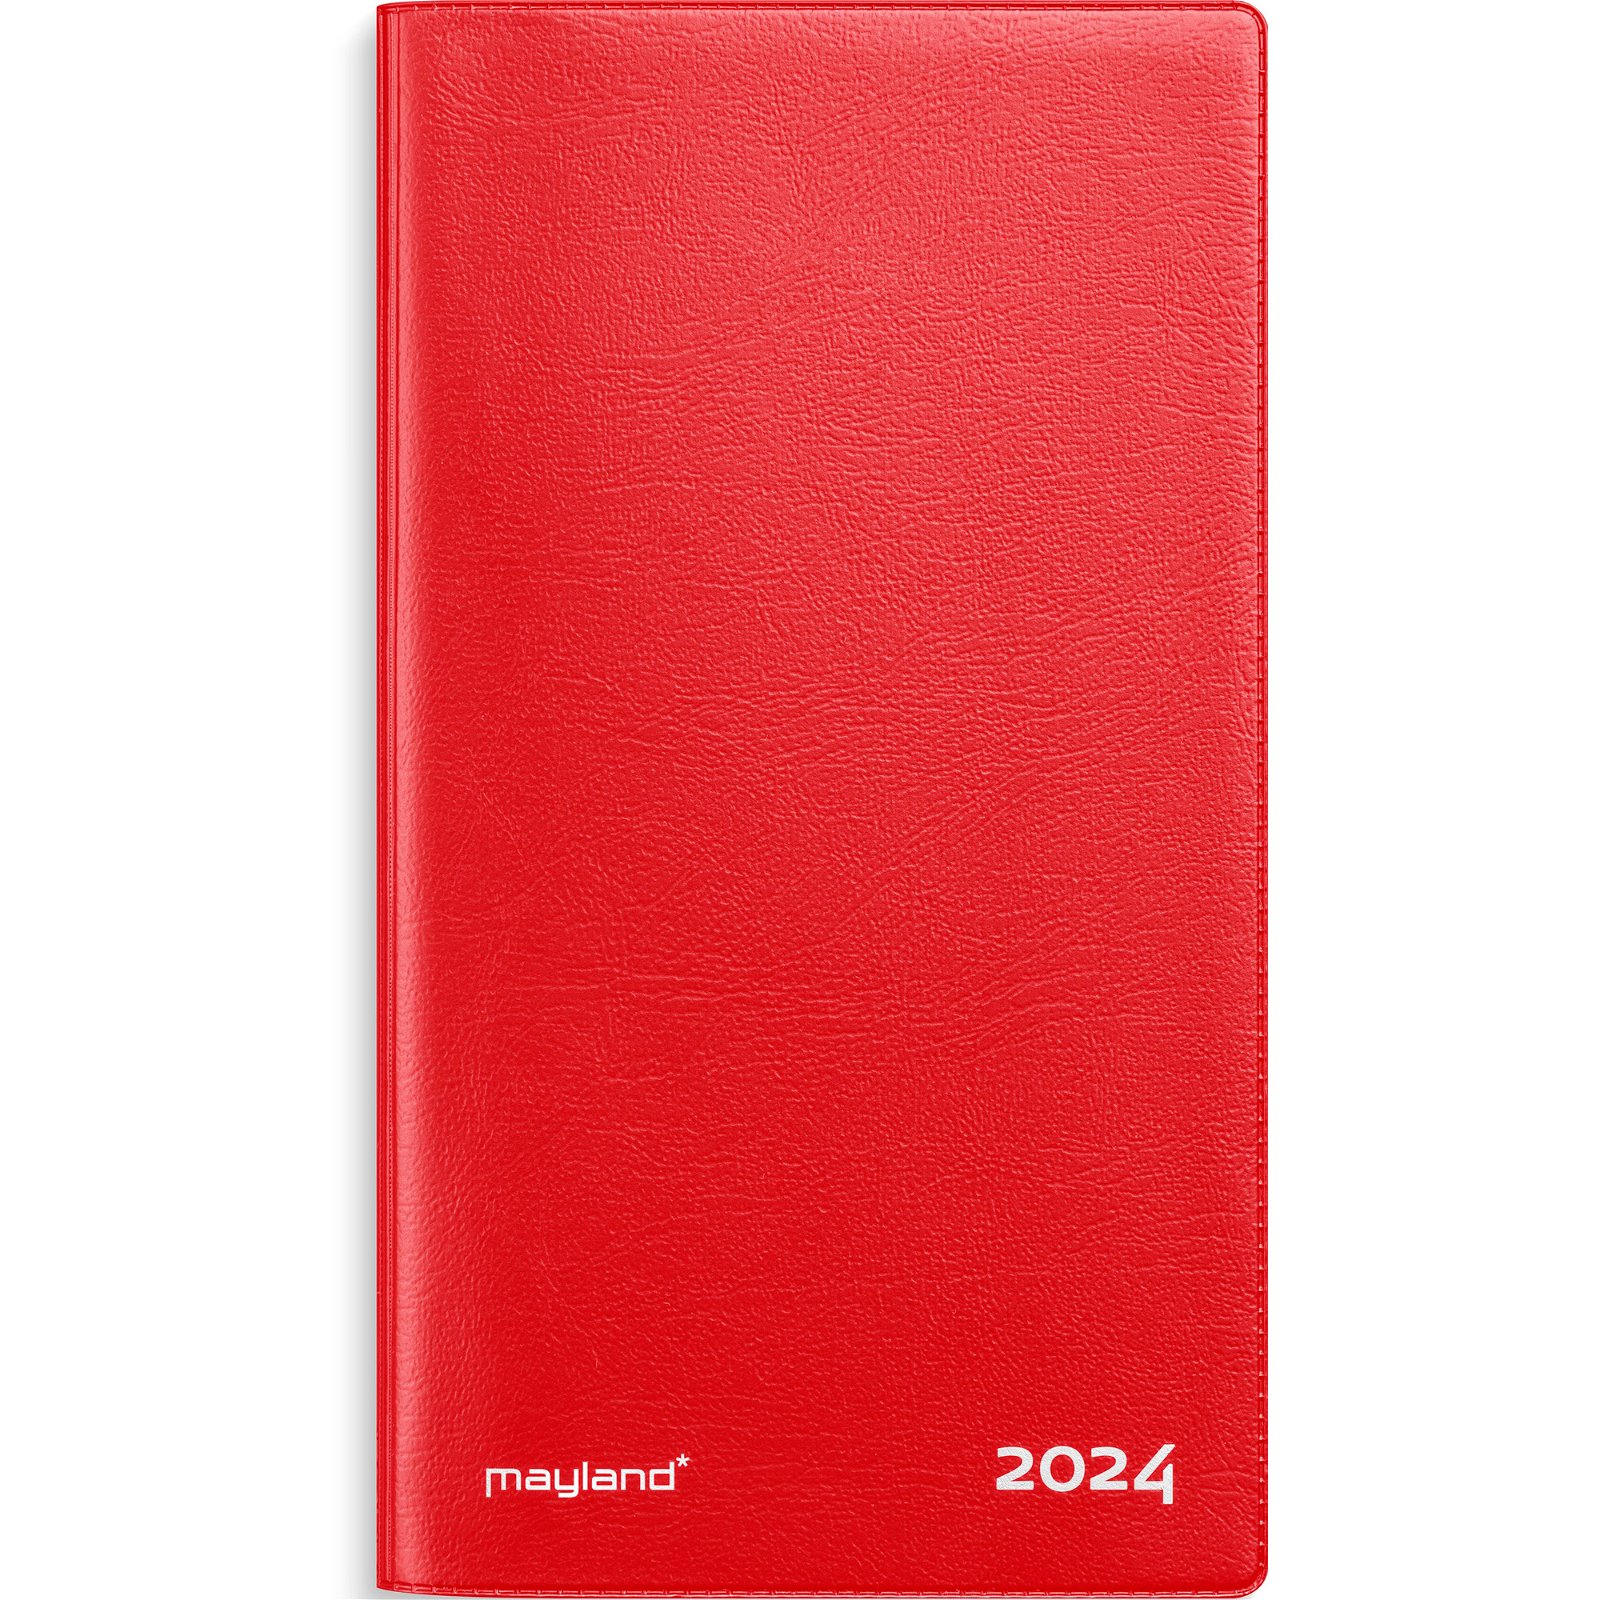 Mayland 2024 24090010 indexkalender 17x9,5cm rød